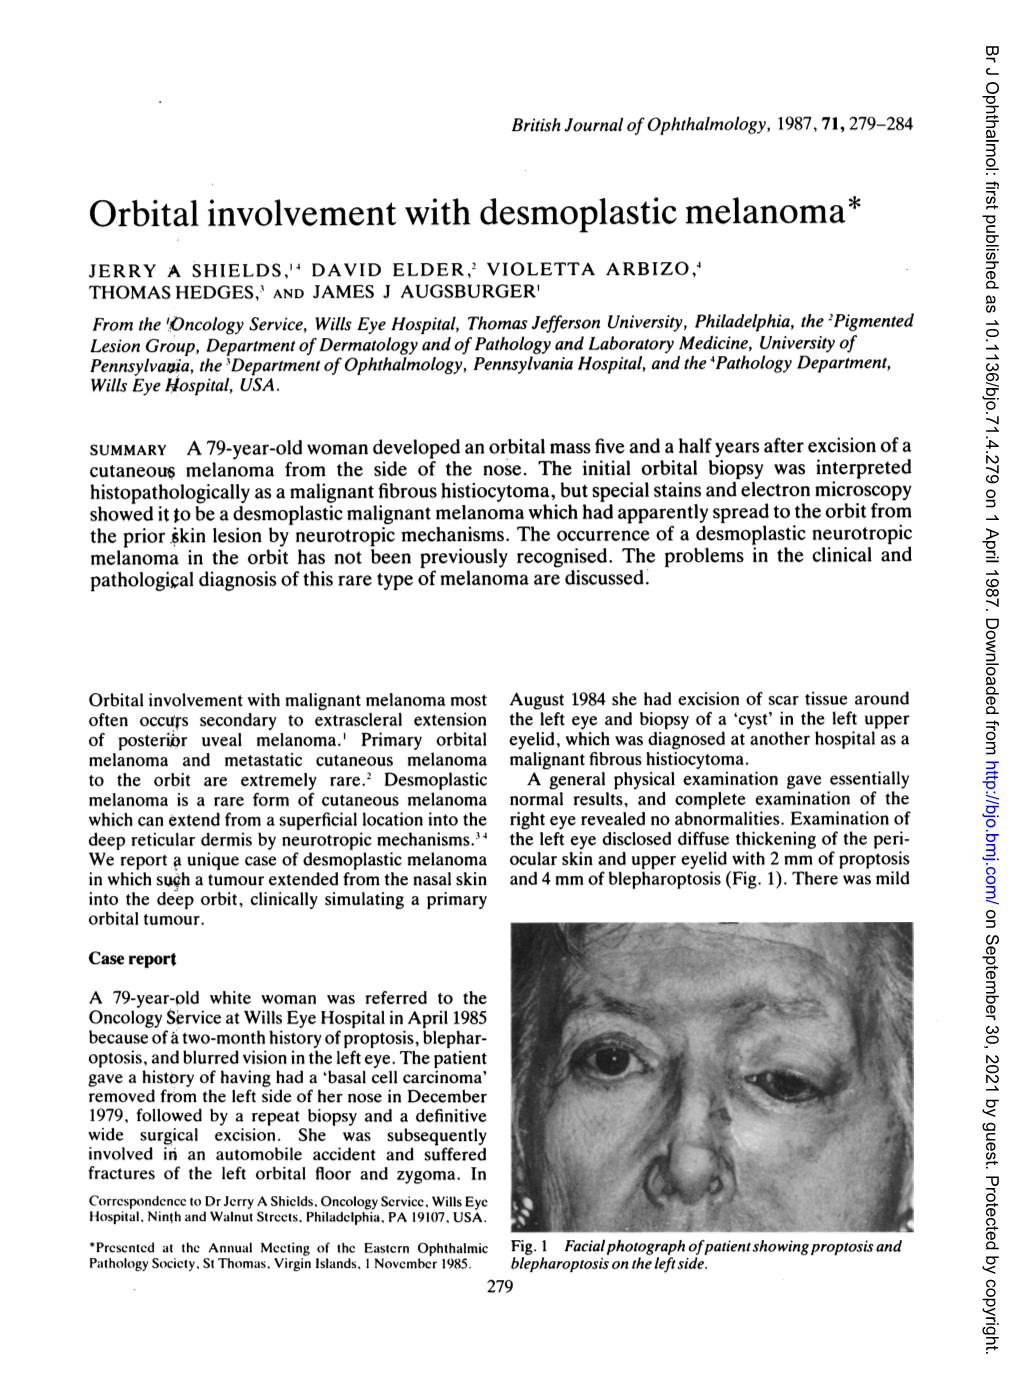 Orbital Involvement with Desmoplastic Melanoma*